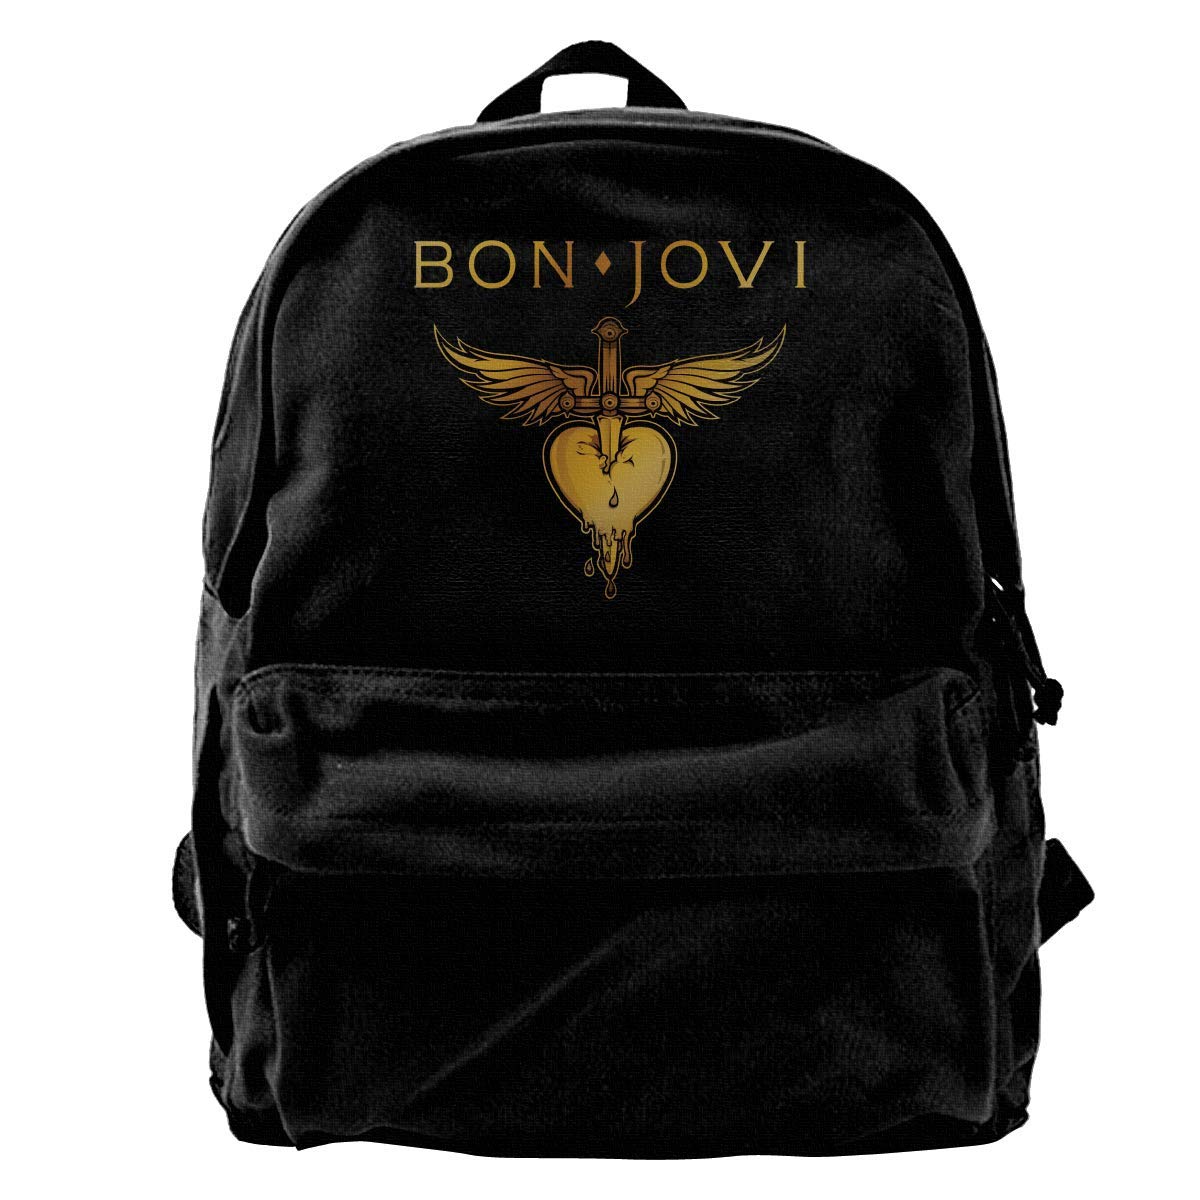 A-Bon-Jovi-backpack